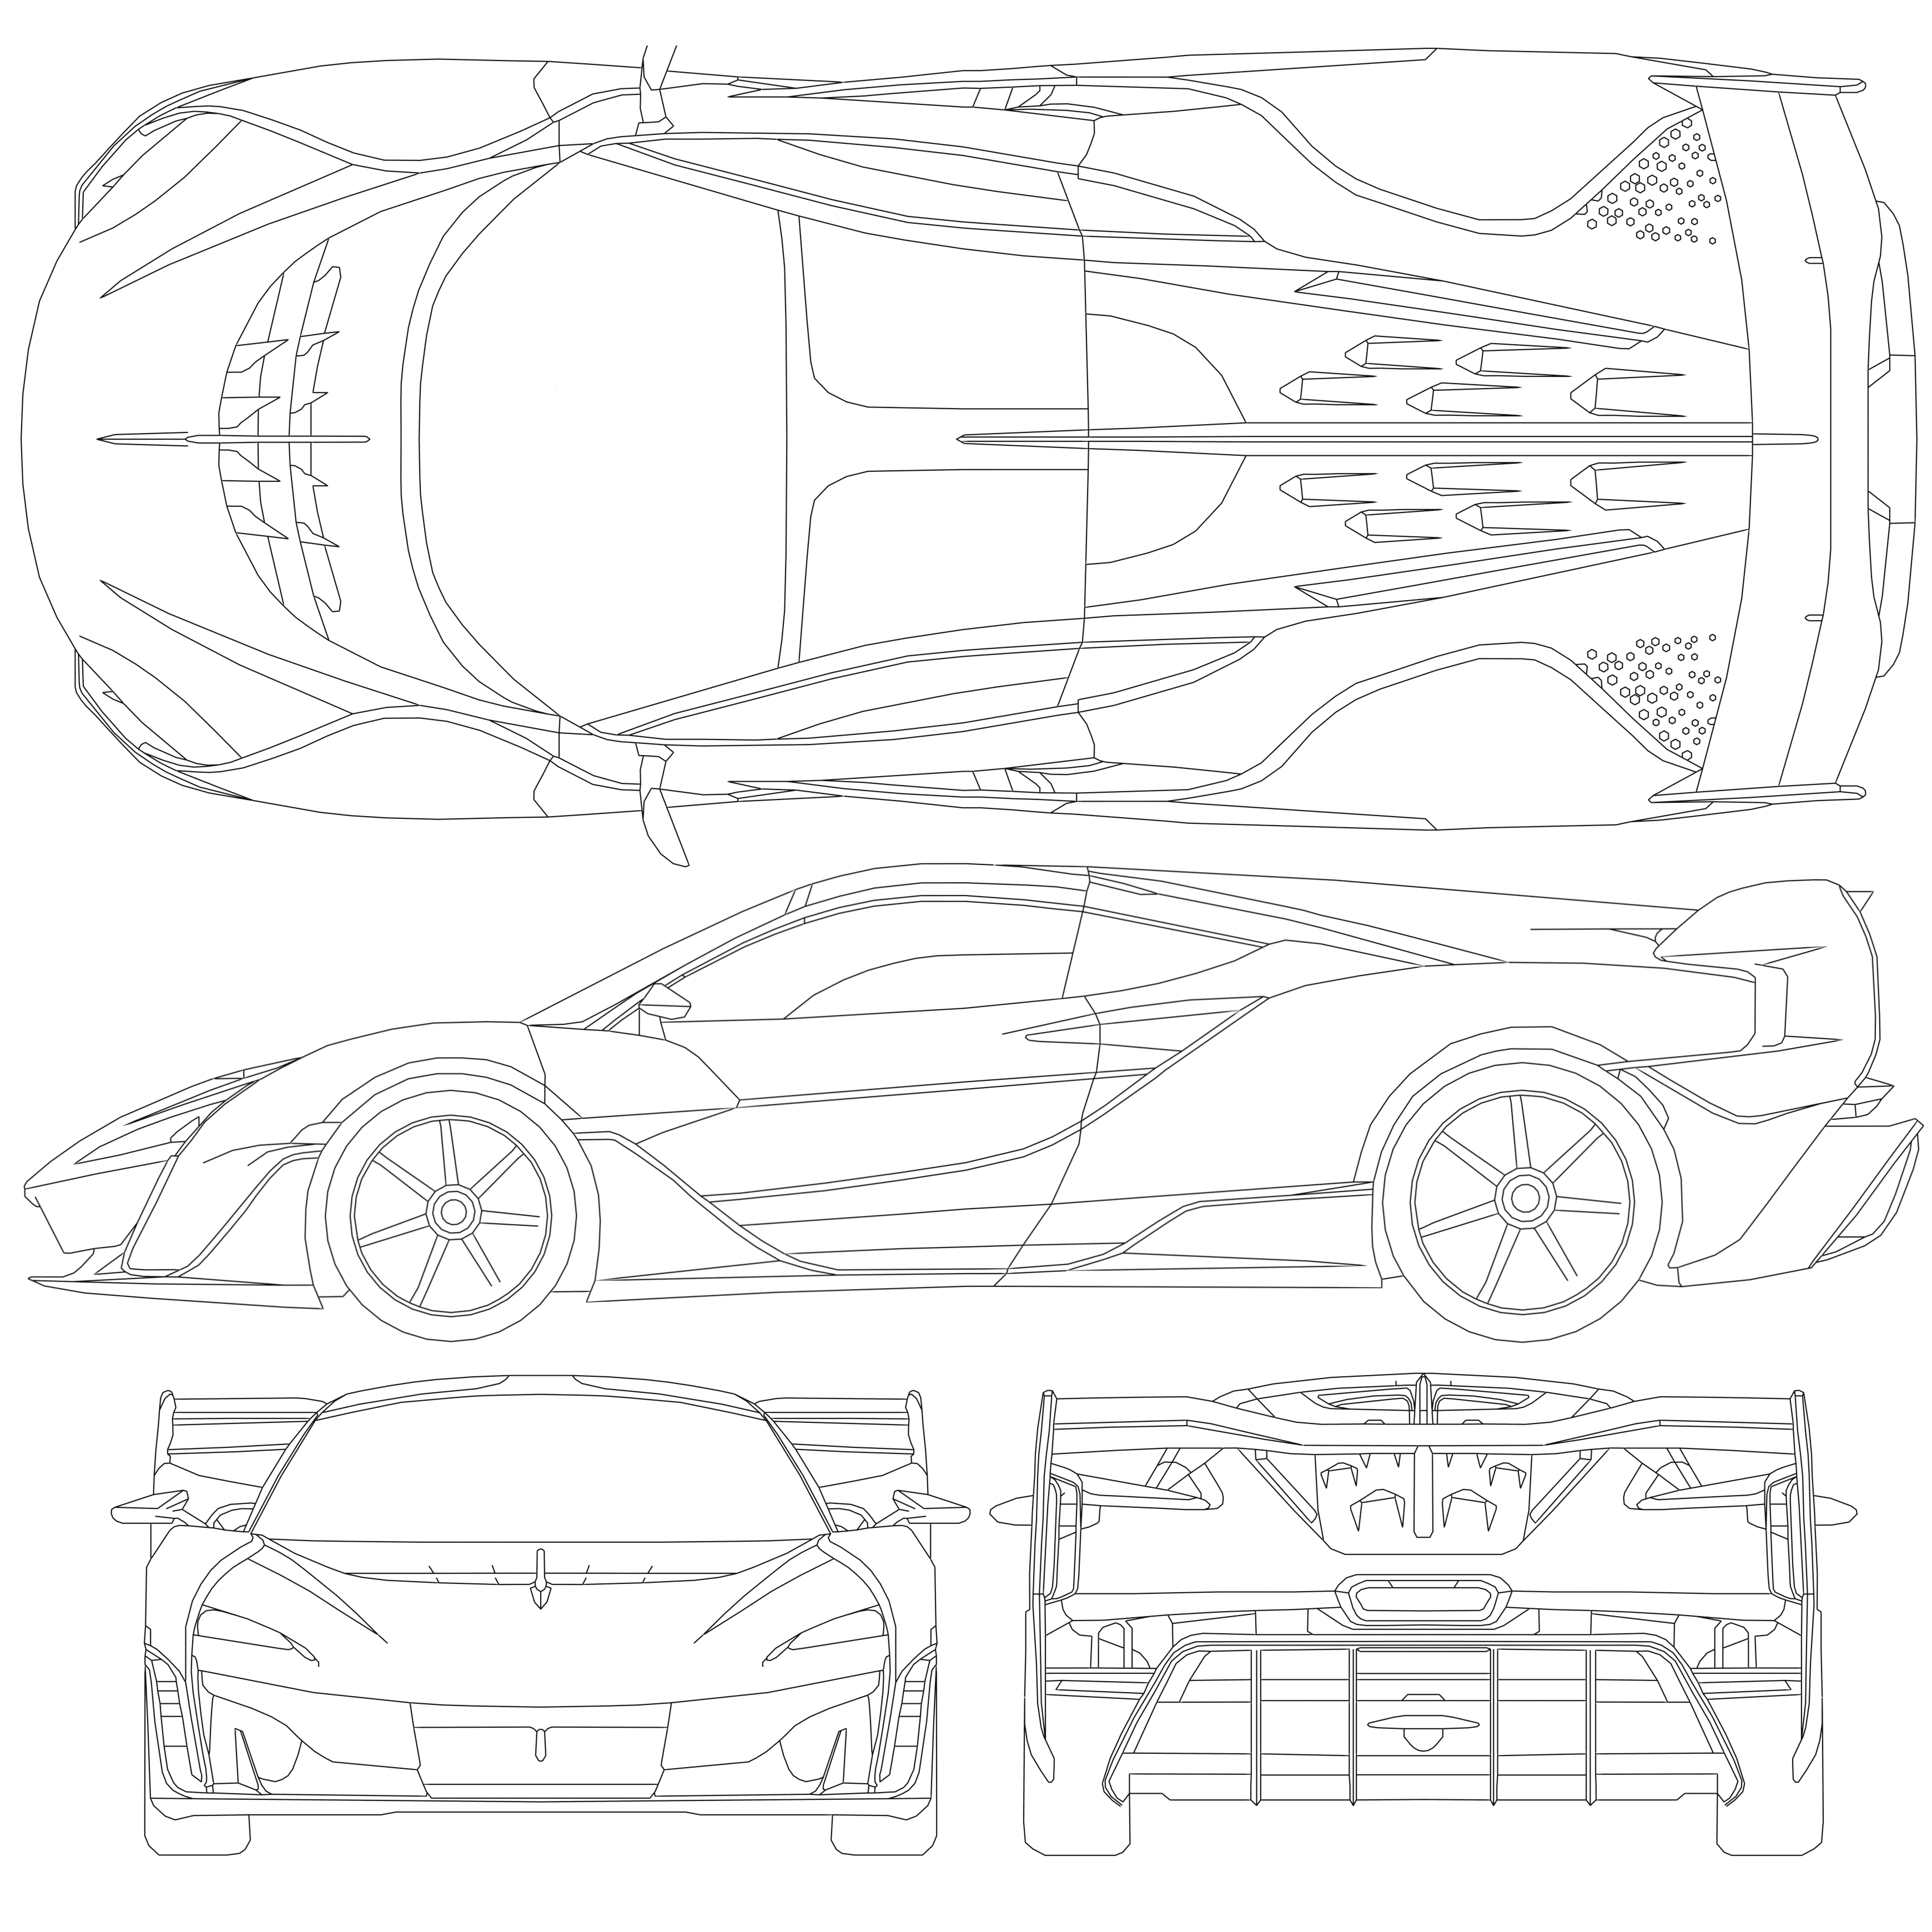 McLaren Sabre blueprint